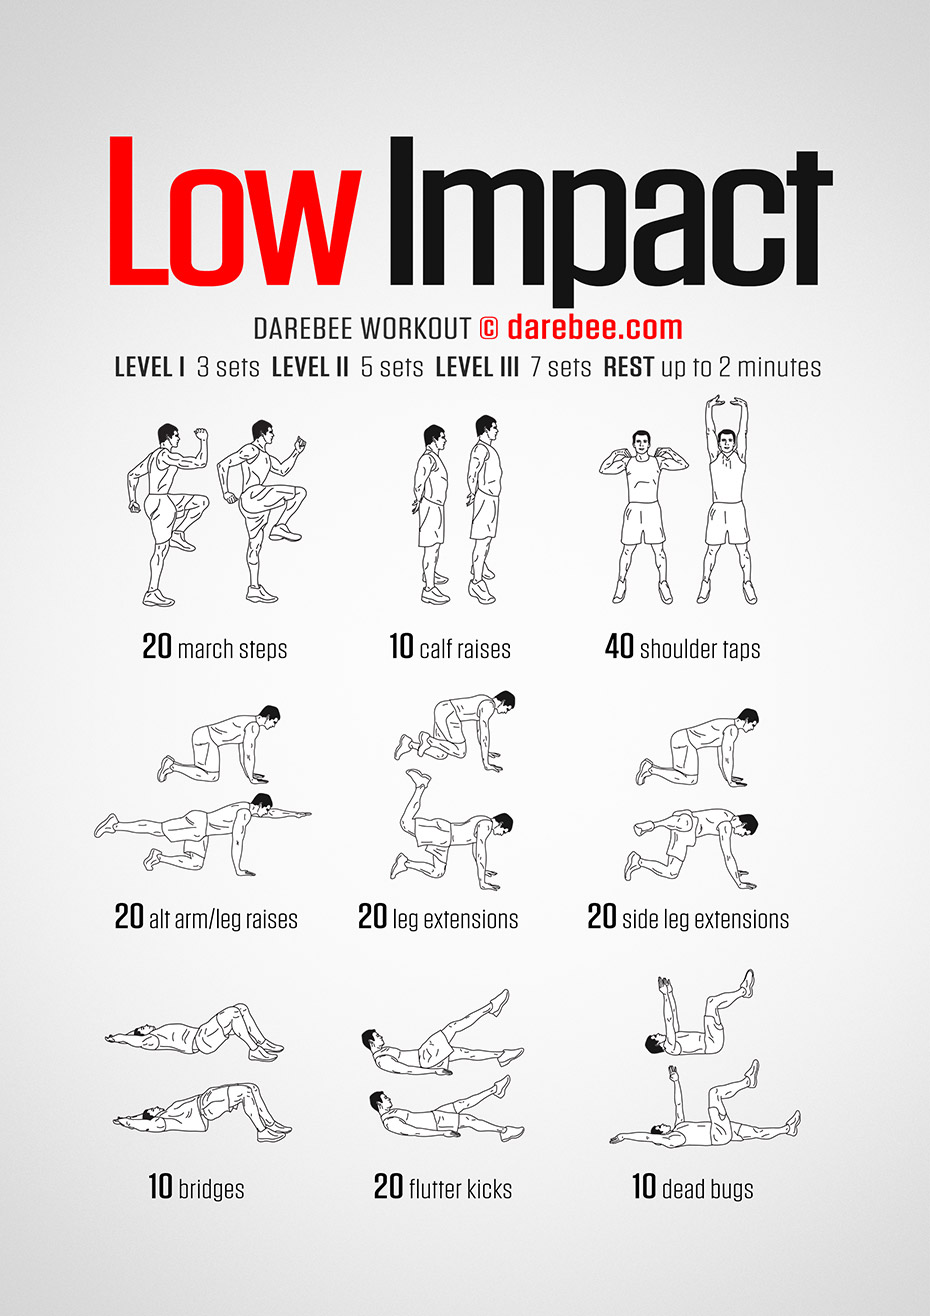 Low-intensity aerobic workouts